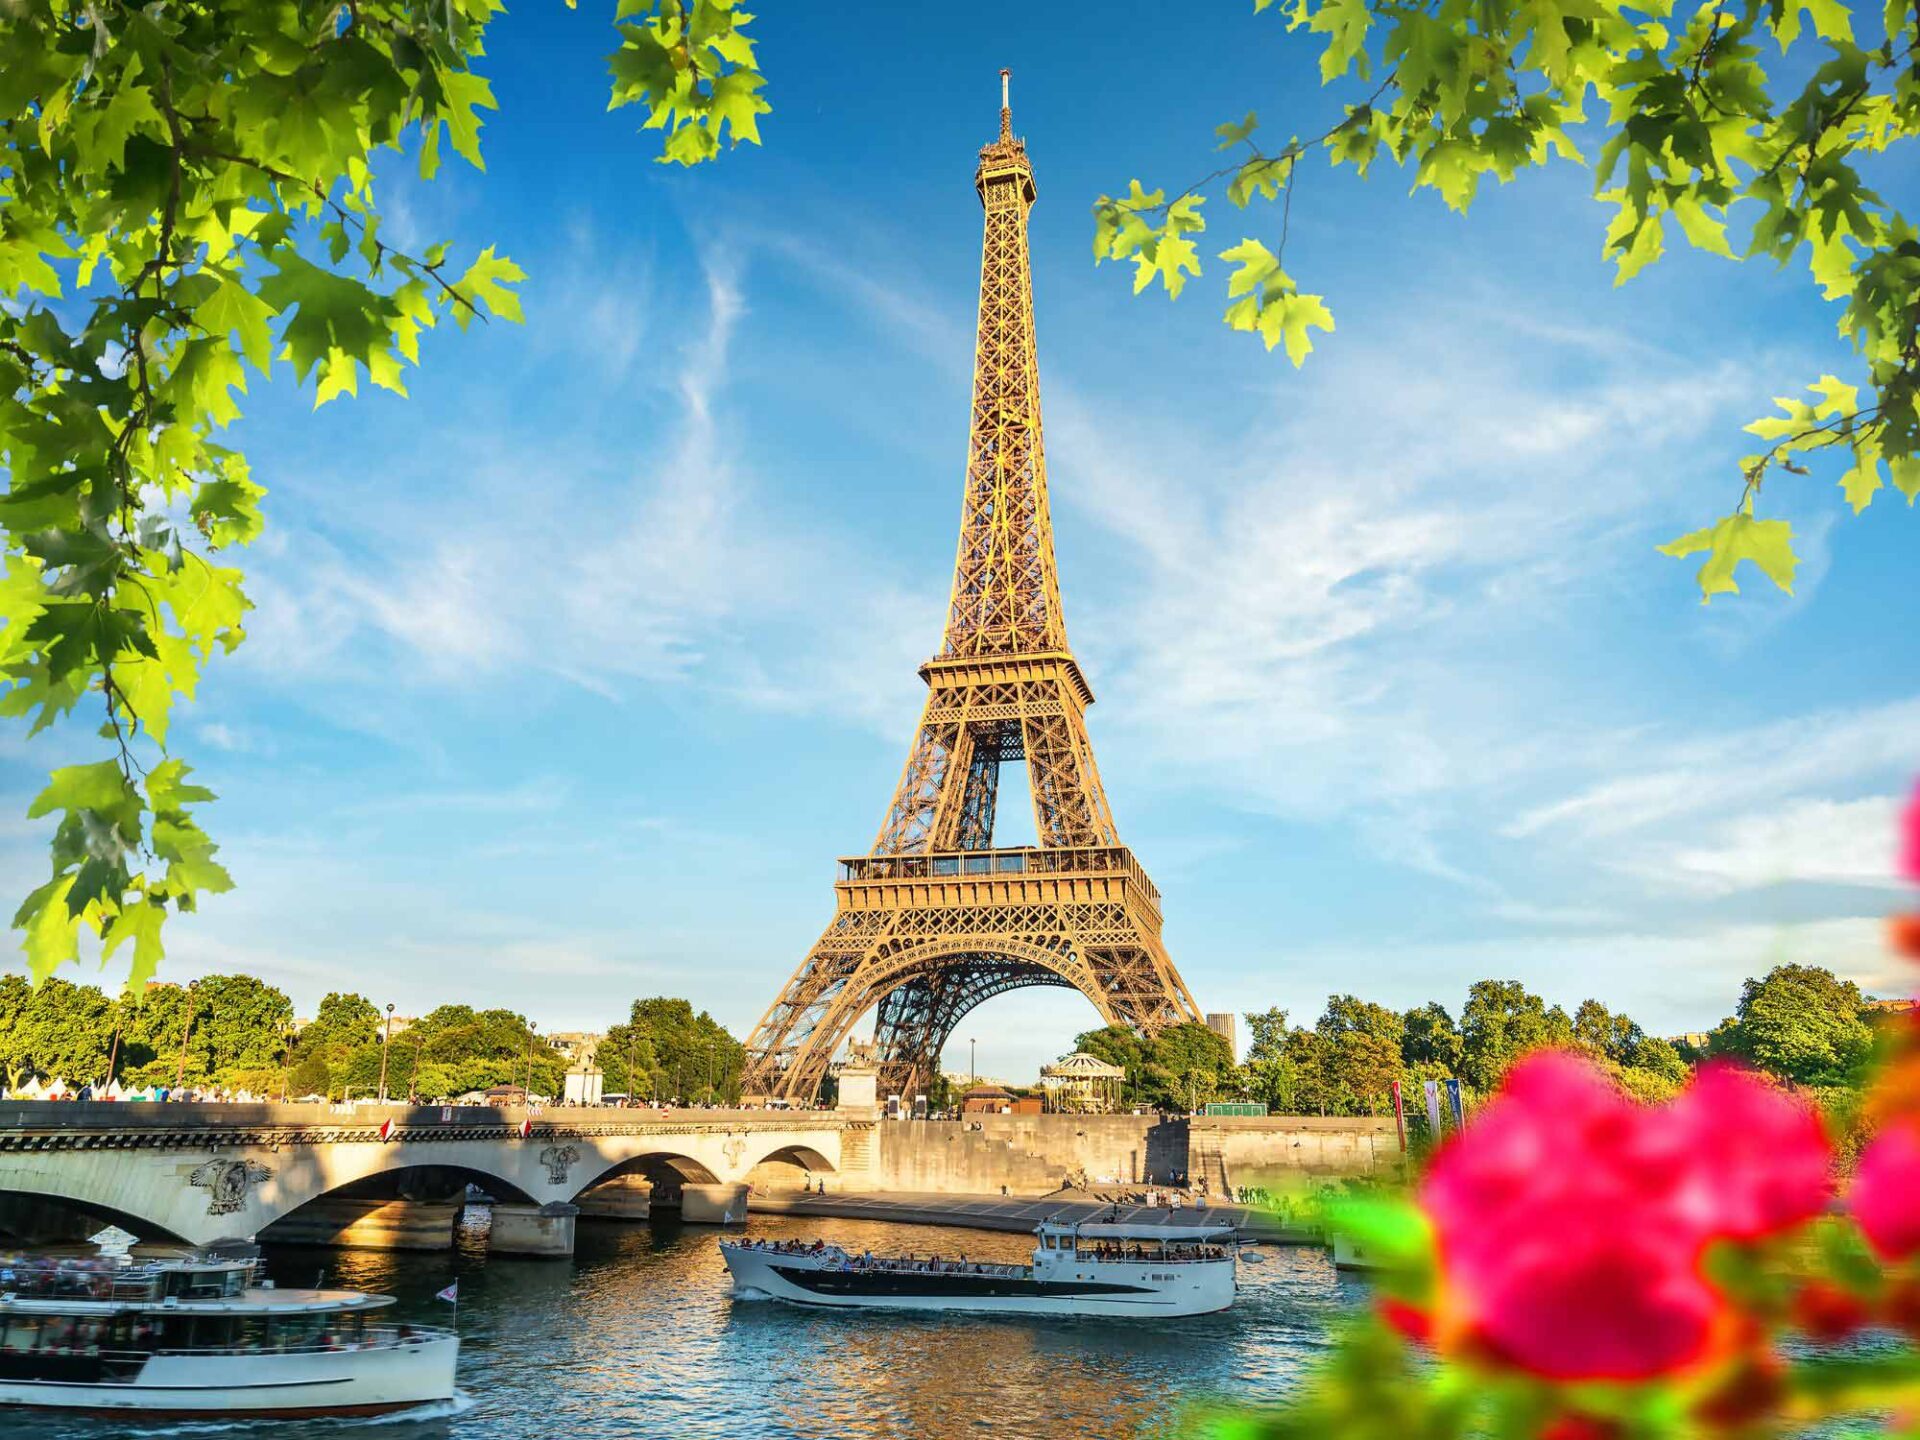 Best spring getaways from Dubai - Paris, France